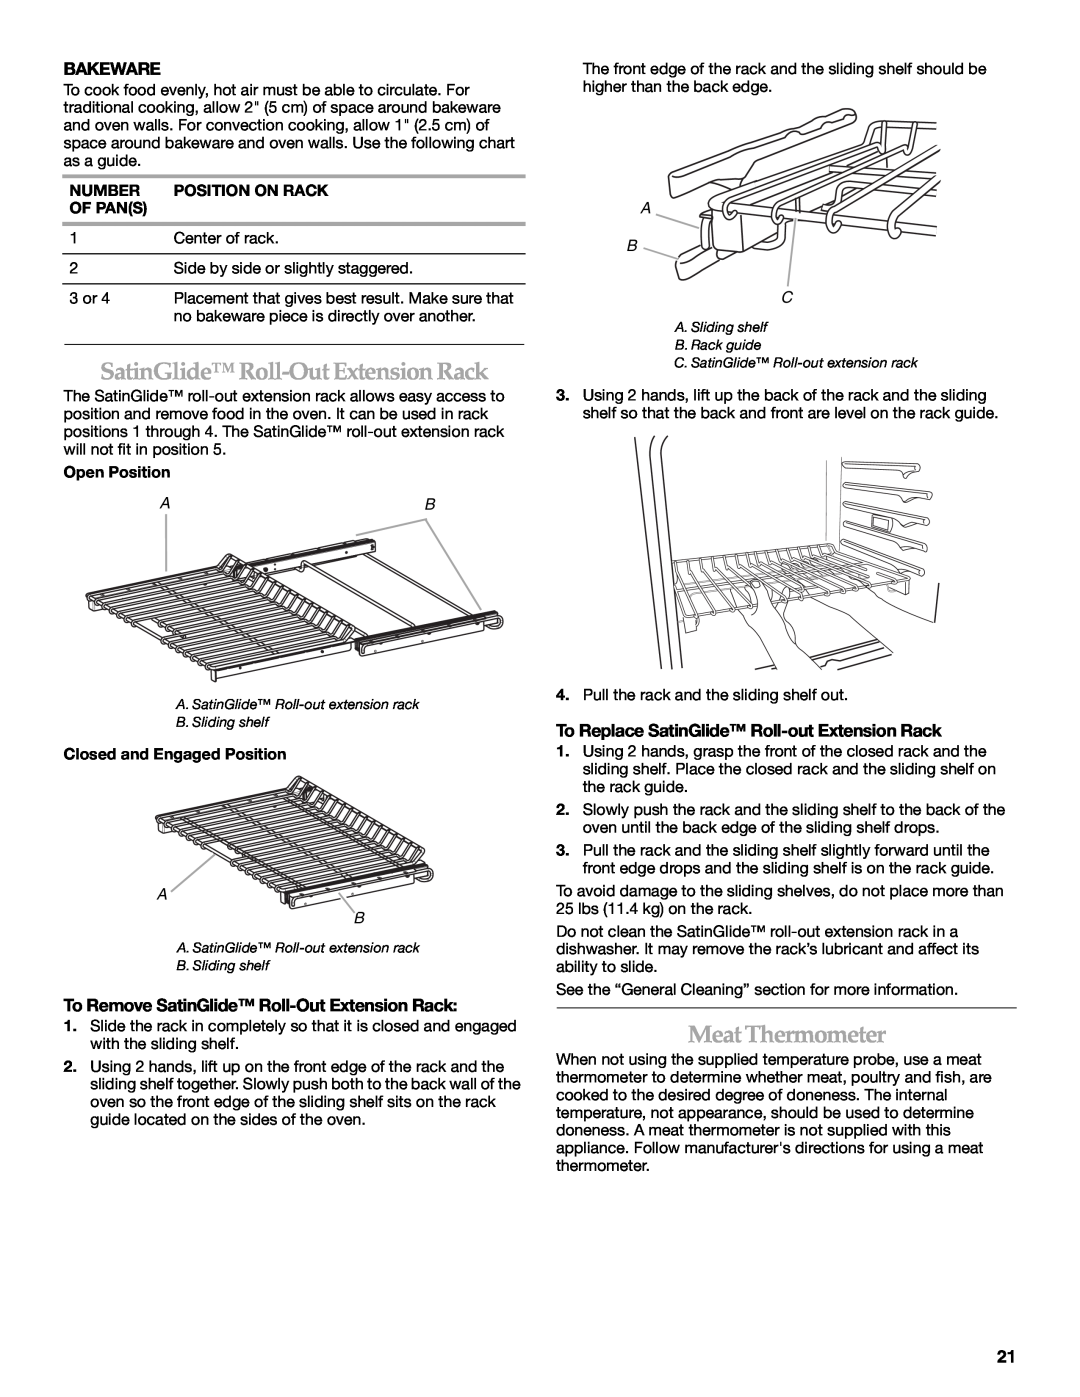 KitchenAid KDRU763.KDRU manual SatinGlide Roll-Out Extension Rack, MeatThermometer, Bakeware, A B C 